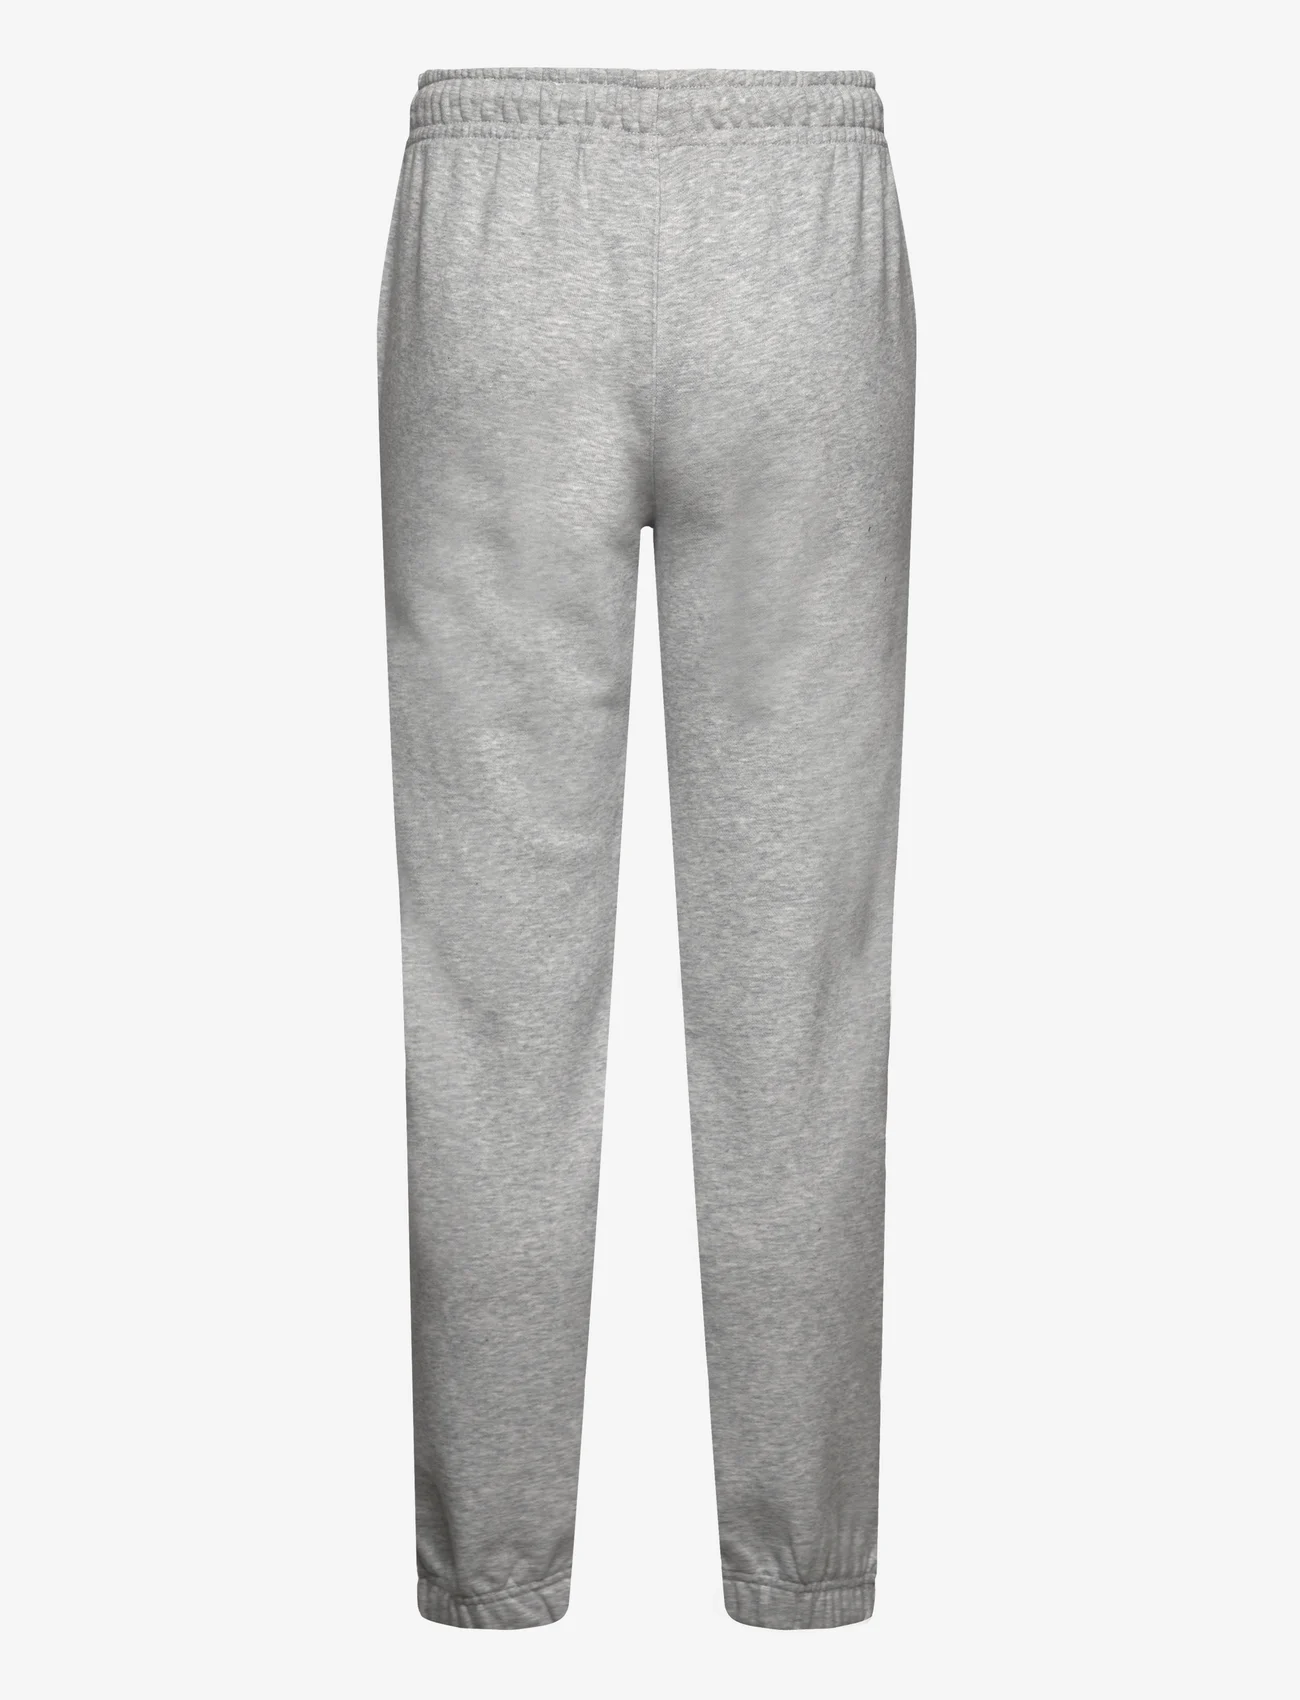 GANT - SHIELD SWEAT PANTS - sweatpants - light grey melange - 1